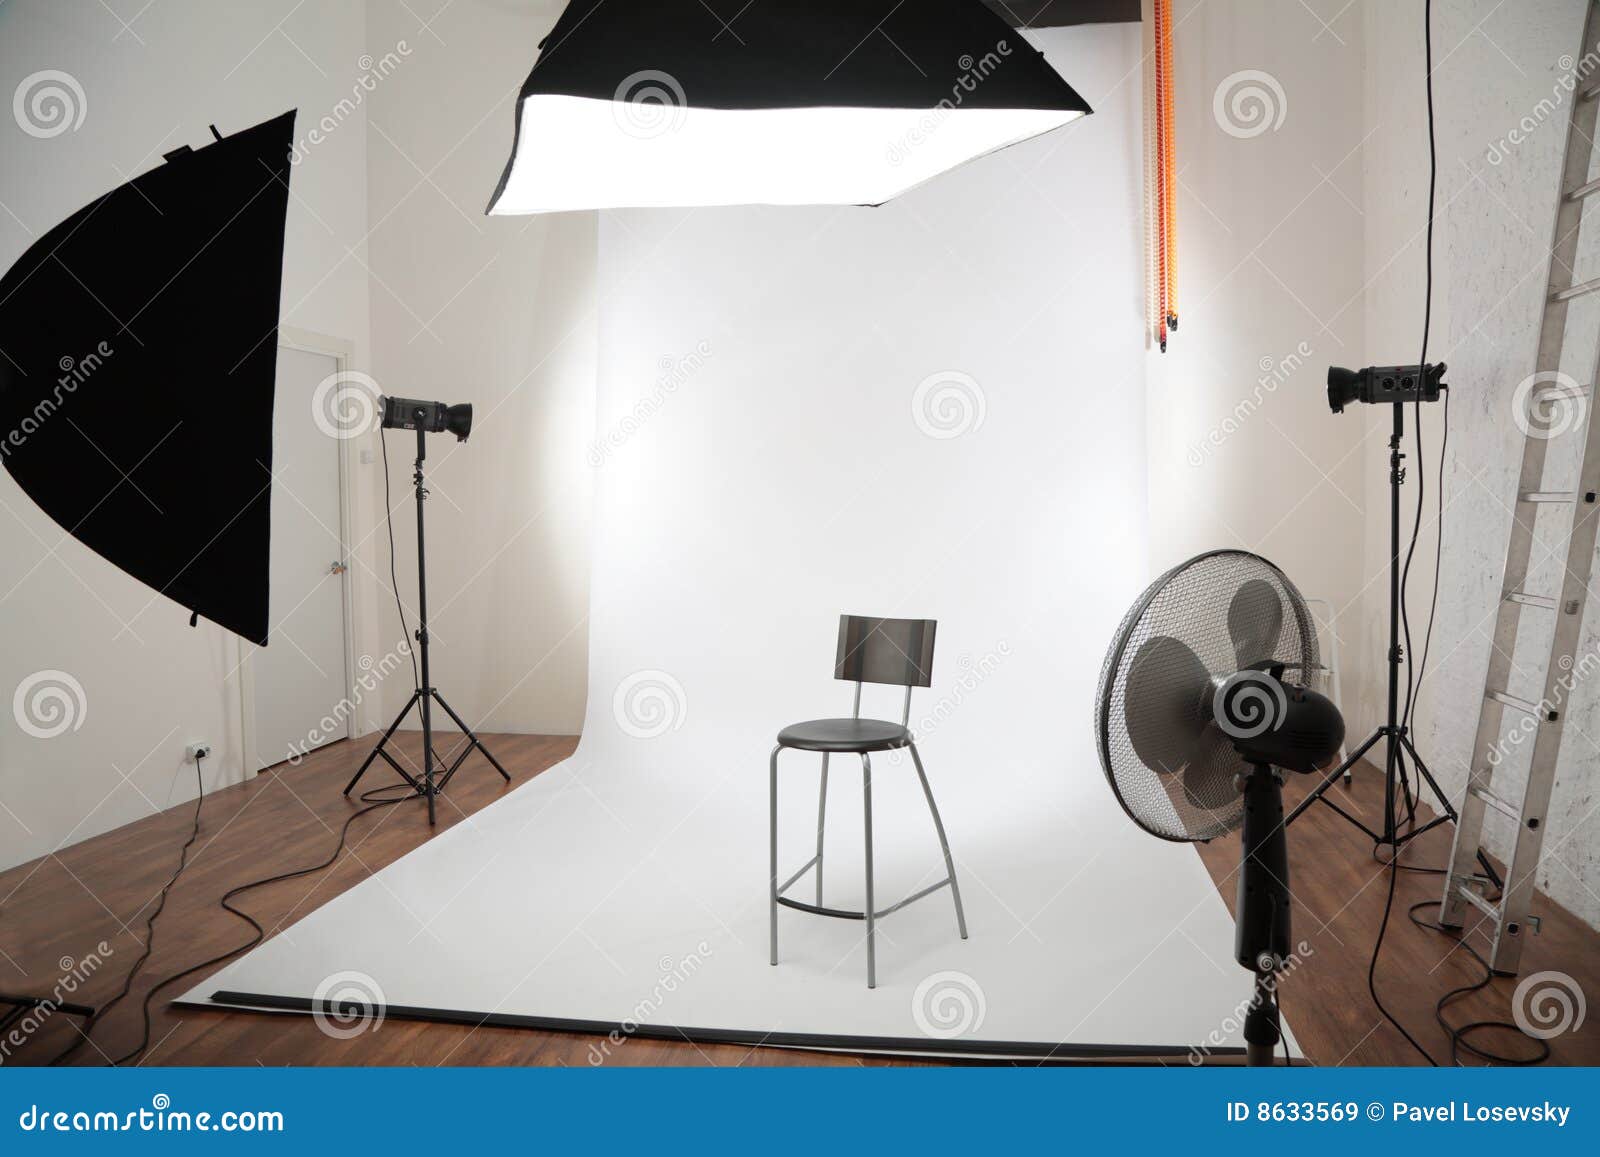 interior of photographic studio